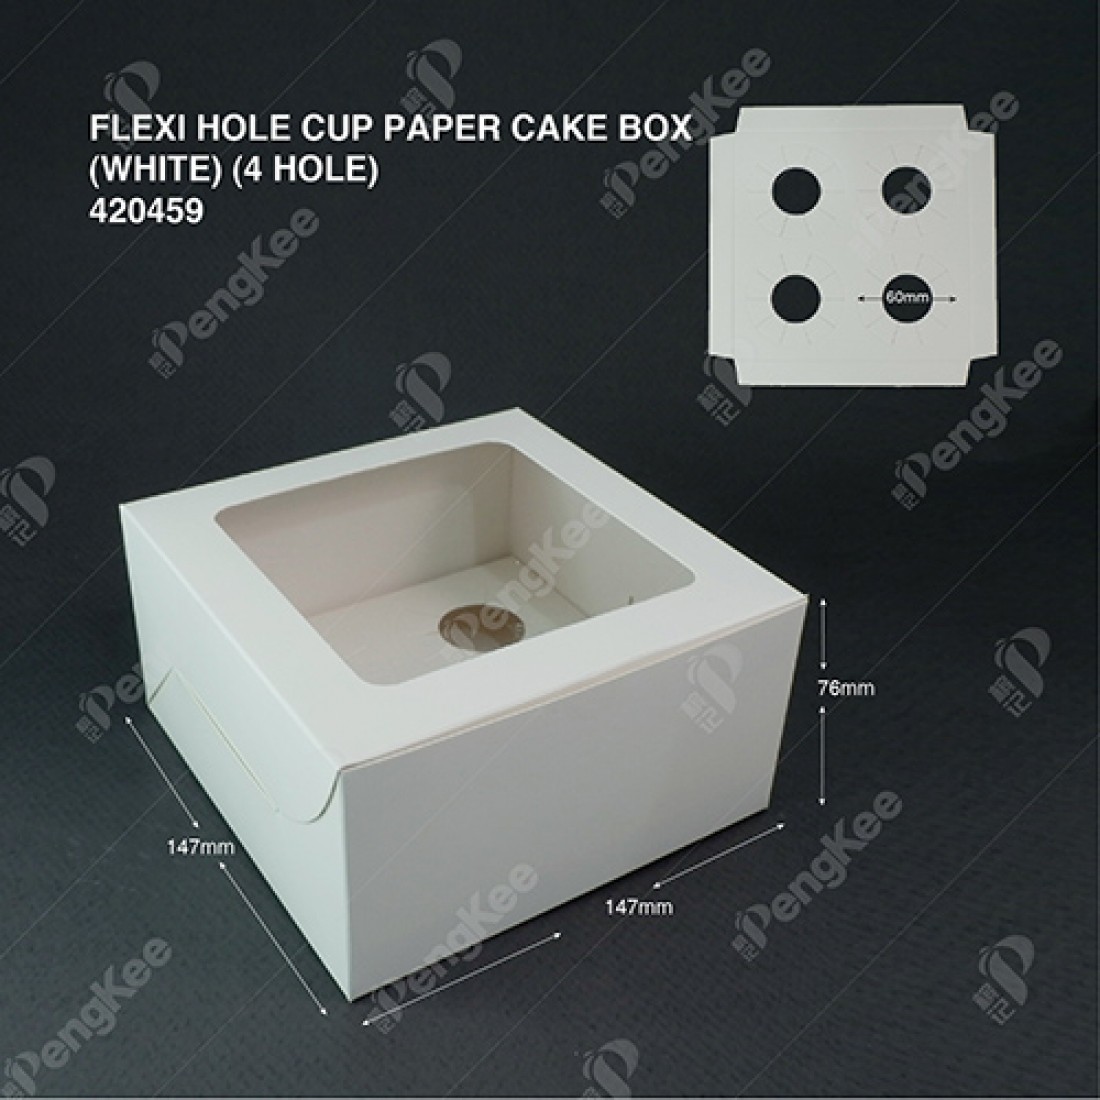 FLEXI HOLE CUP PAPER CAKE BOX (WHITE) (4 HOLE )( 50PCS PKT ) 